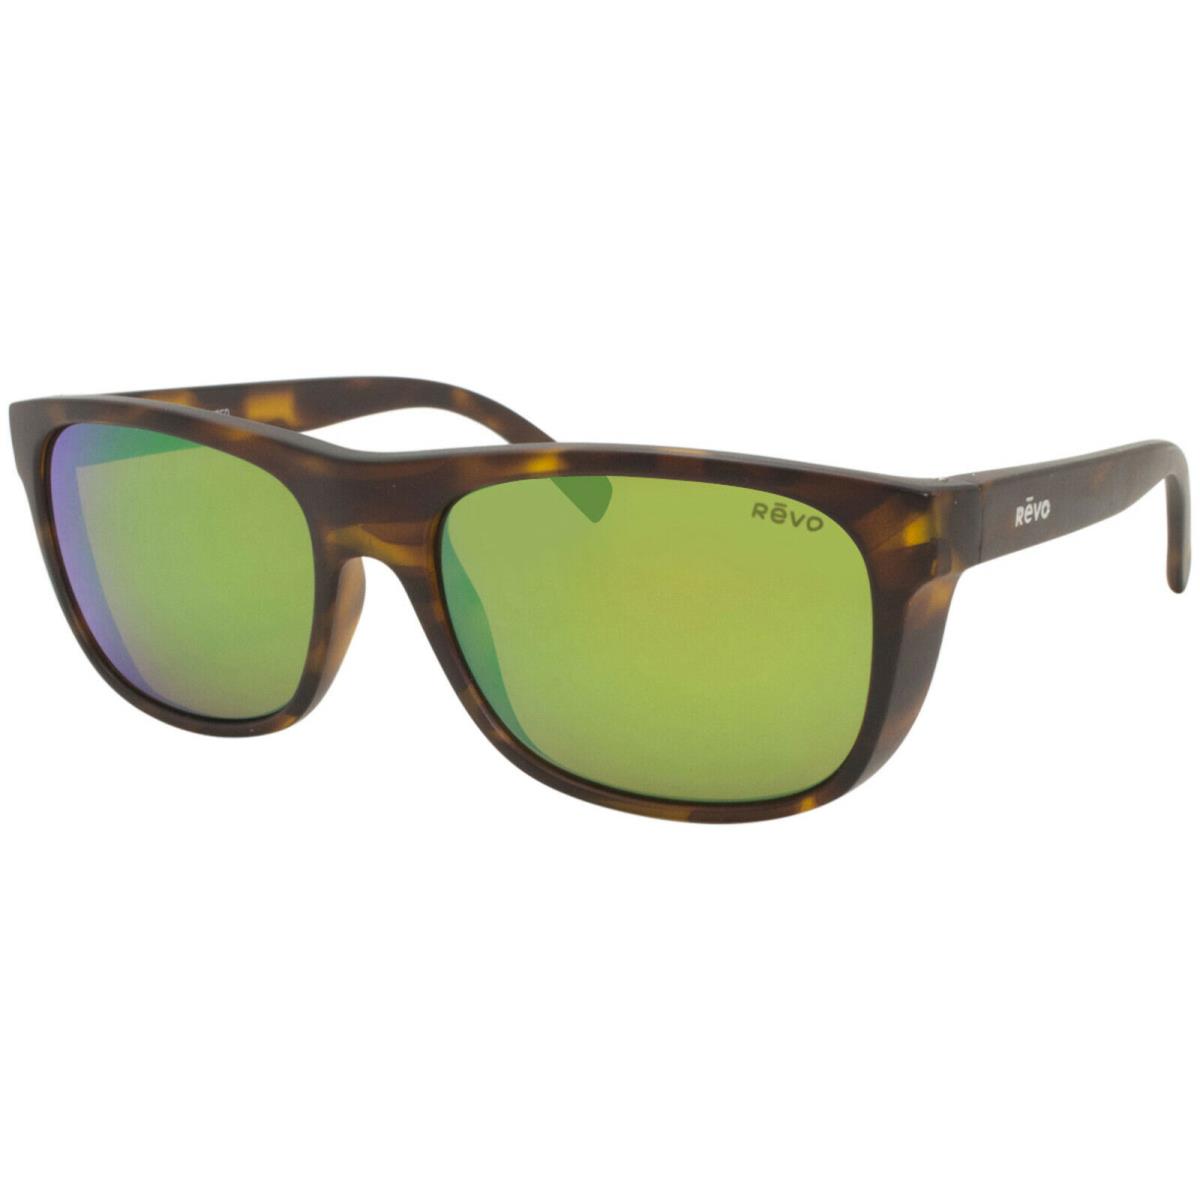 Revo Lukee Polarized Sunglasses - RE 1020 02GN/Tortoise/Evergreen